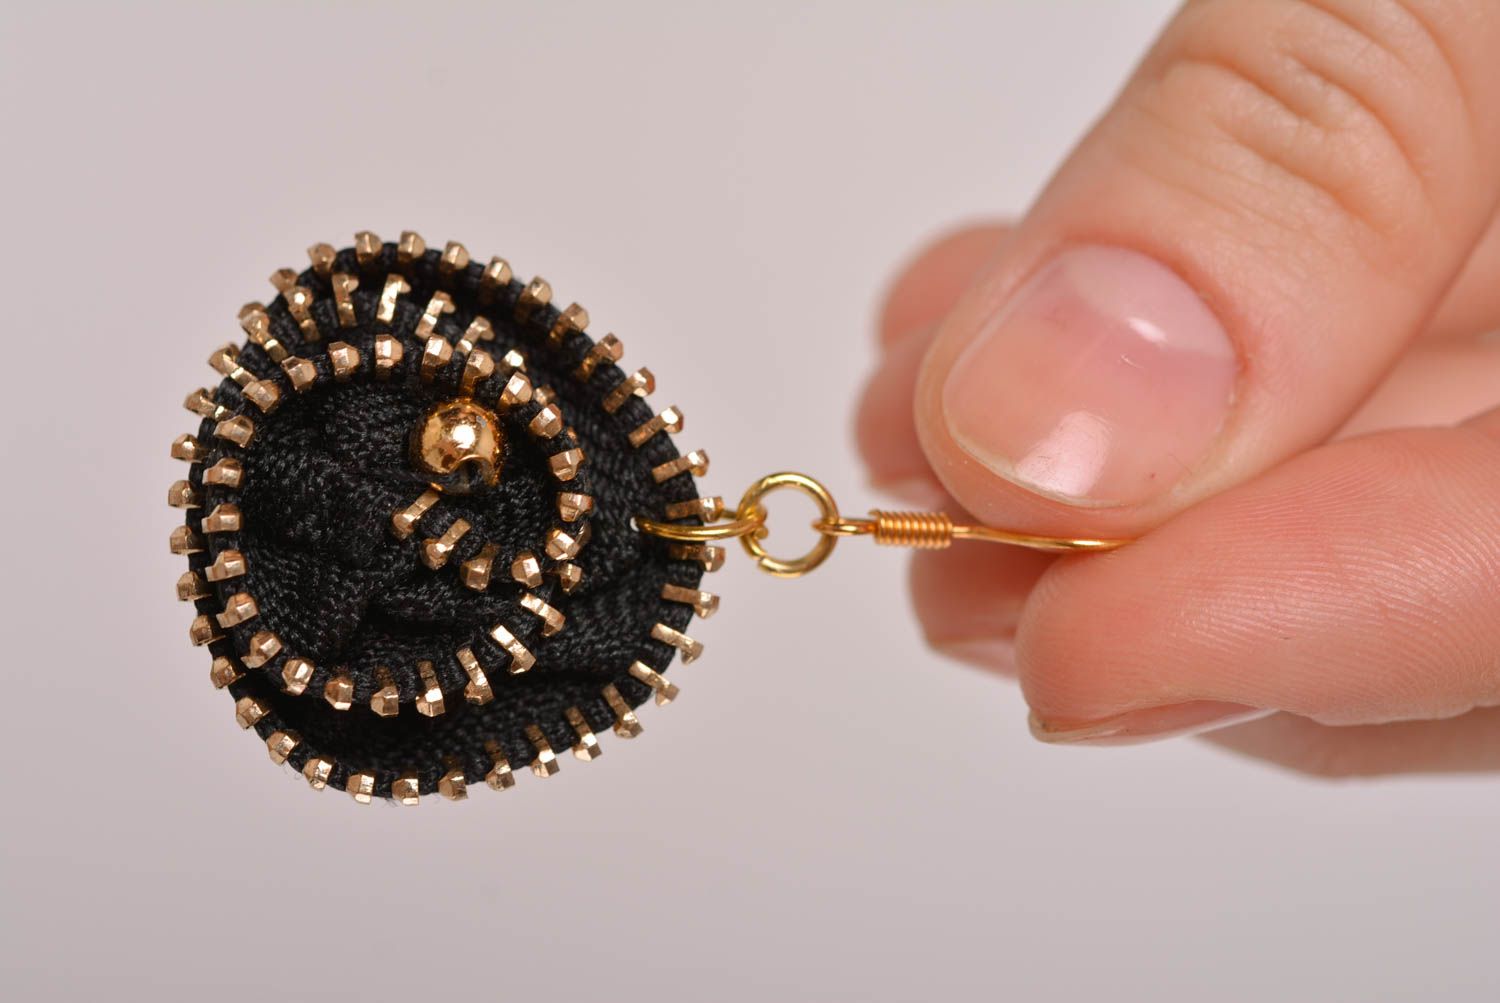 Handmade earrings designer accessory unusual jewelry for women gift ideas photo 2